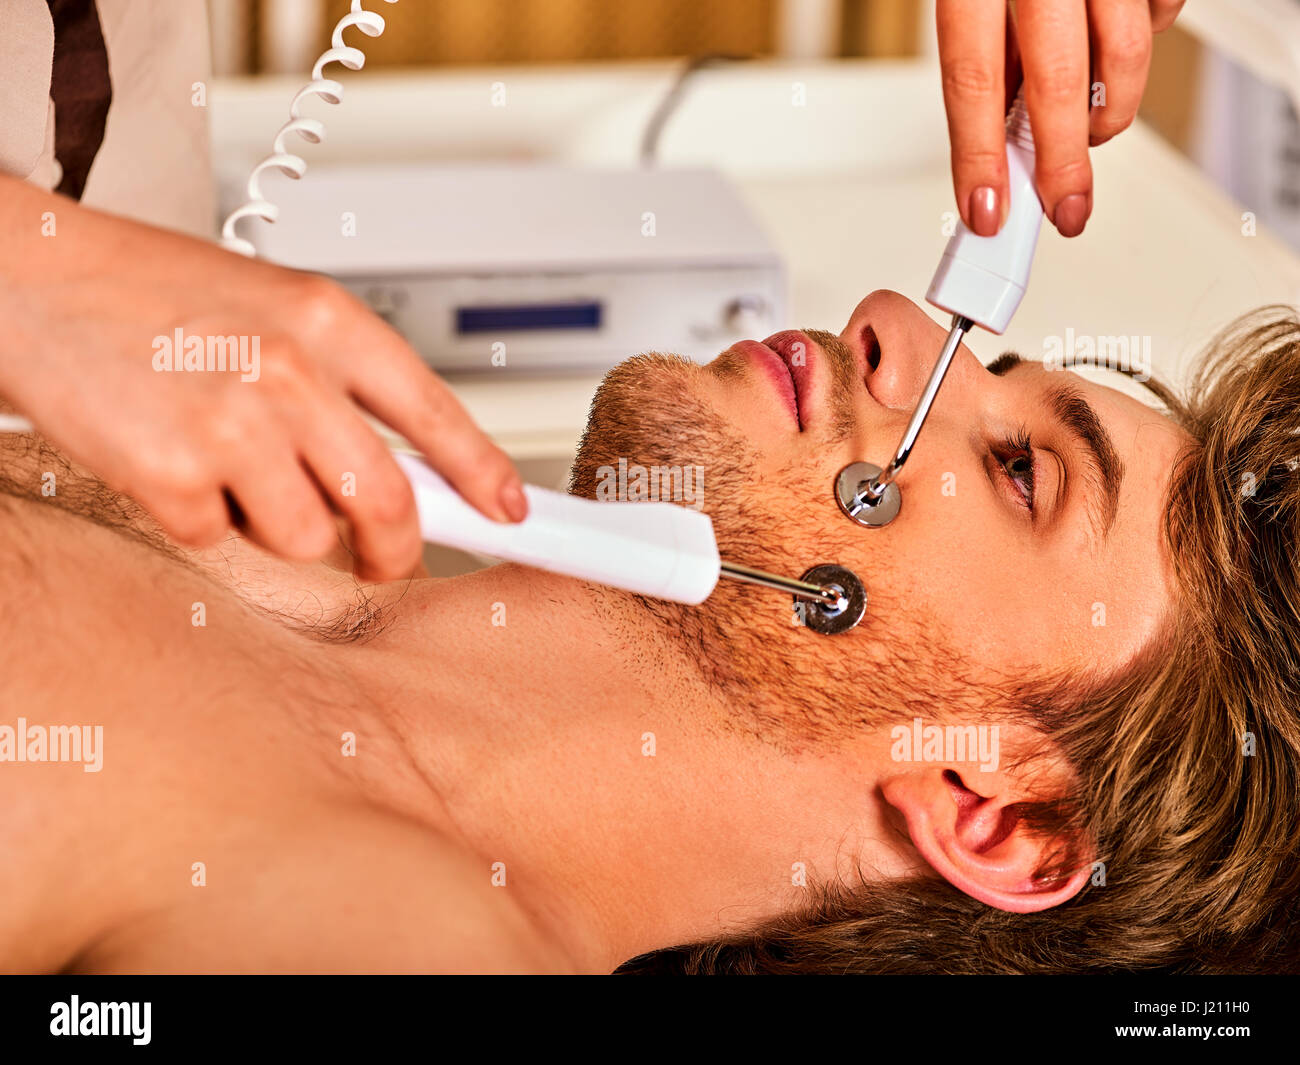 Facial massage at beauty salon. Electric stimulation woman skin care. Stock Photo